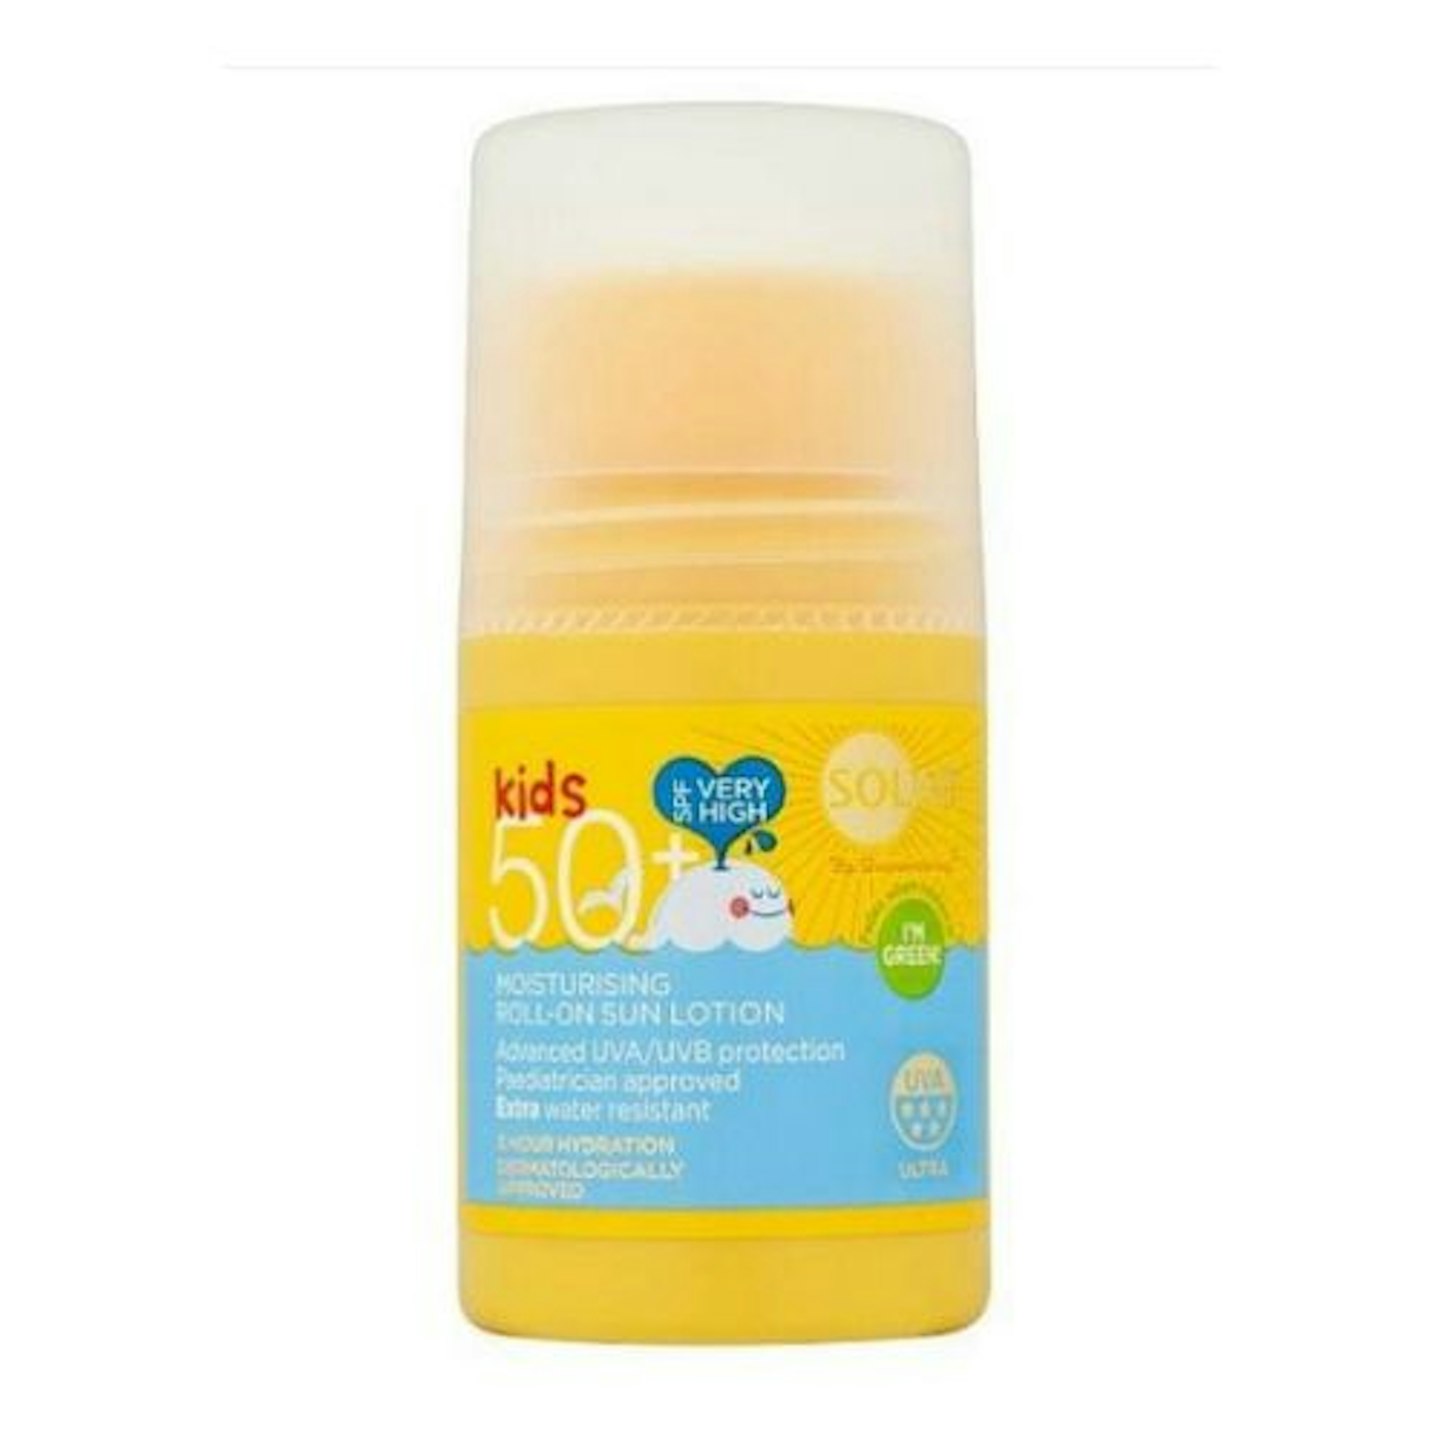 Solait Kids Roll-on Sun Cream - sunscreen stick